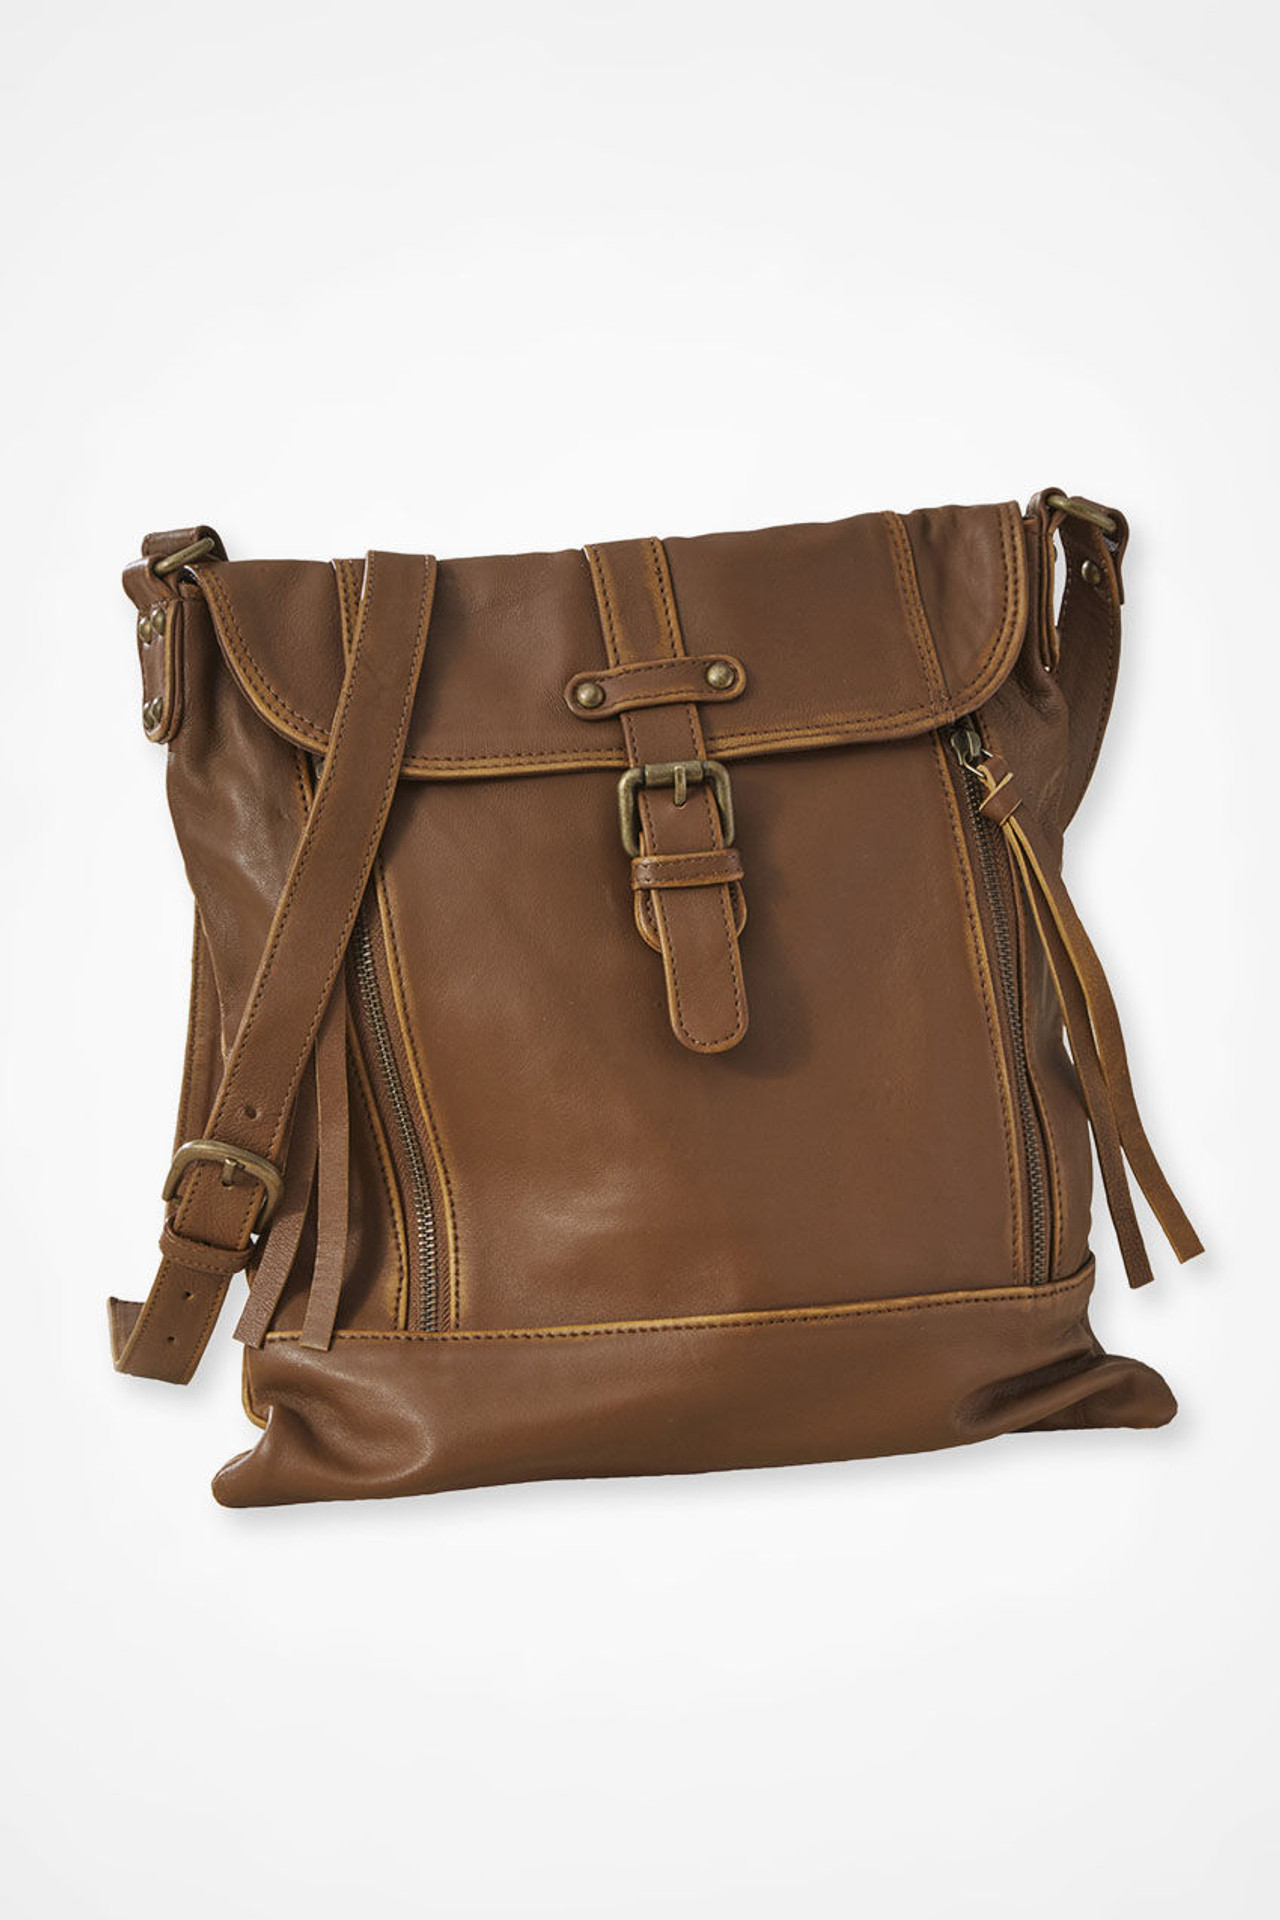 Amazon.com: [Upgraded] Vintage Canvas Messenger Bag Large Book Laptop  Shoulder Bag Women Men New : Clothing, Shoes & Jewelry